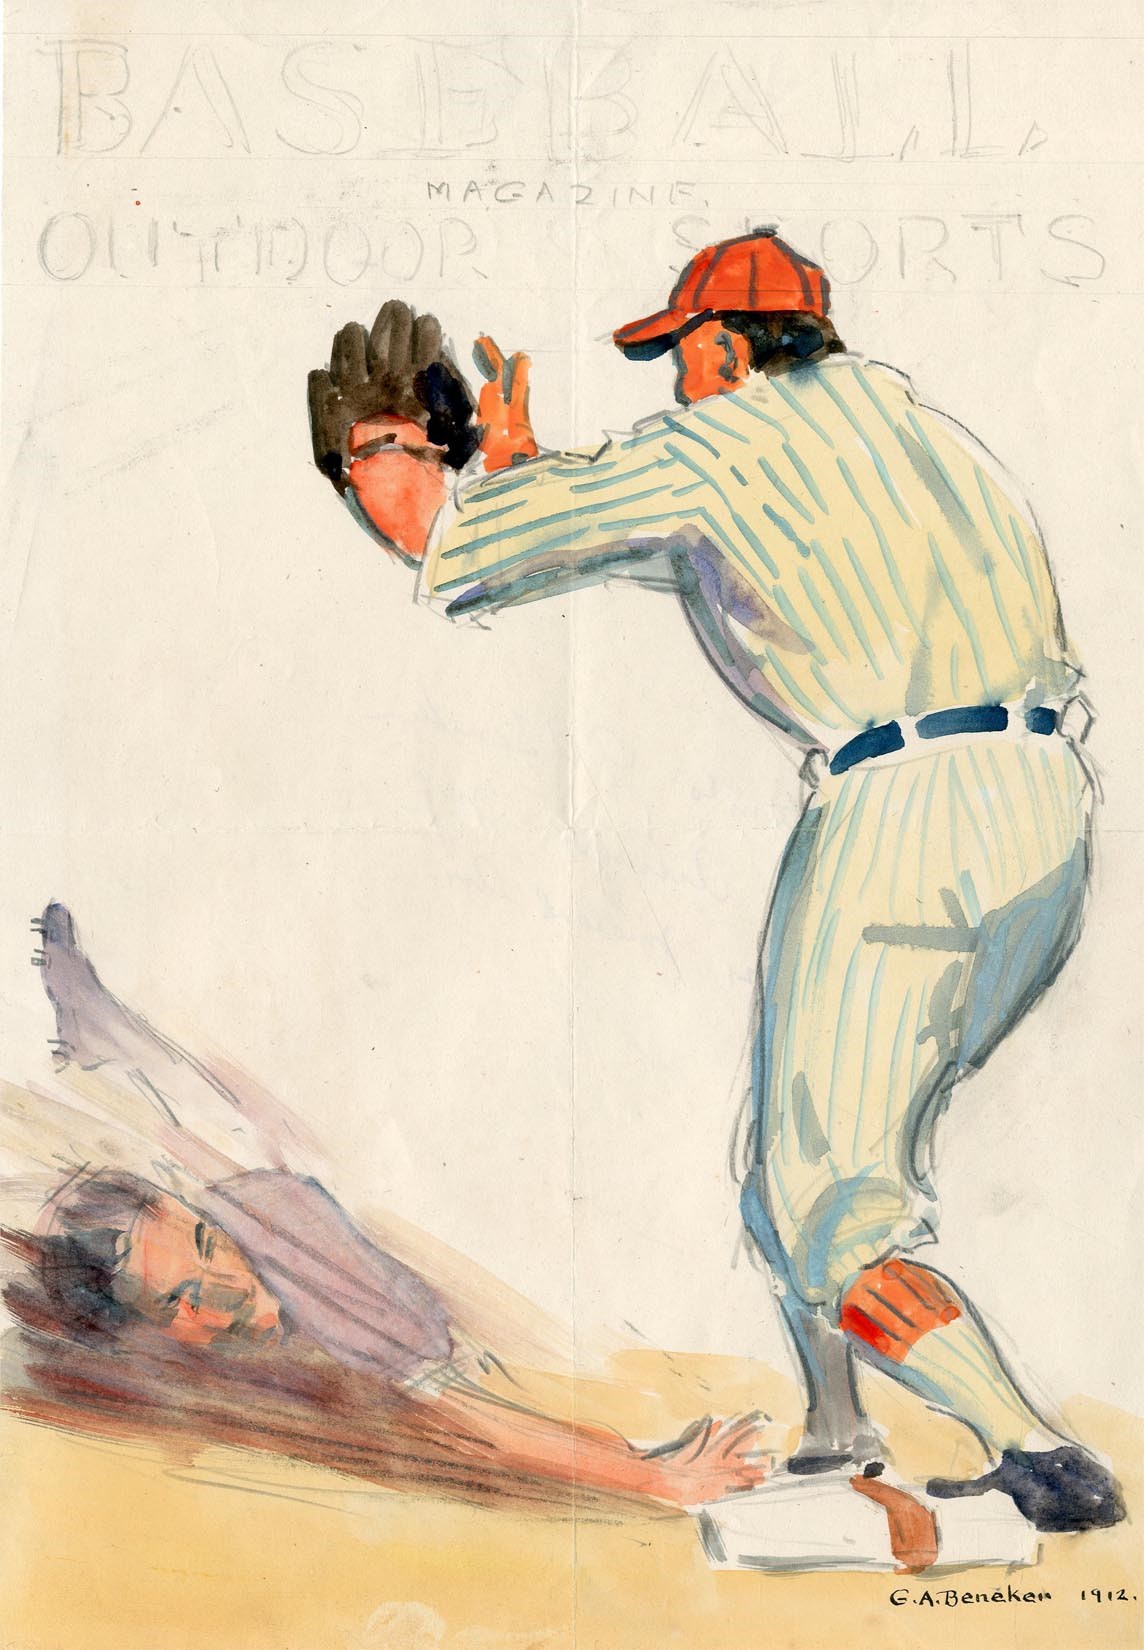 The Baseball Magazine Original Art - 1912 Baseball Magazine "Cloud of Dust" Cover Art Study by Gerrit Beneker (1882-1934)